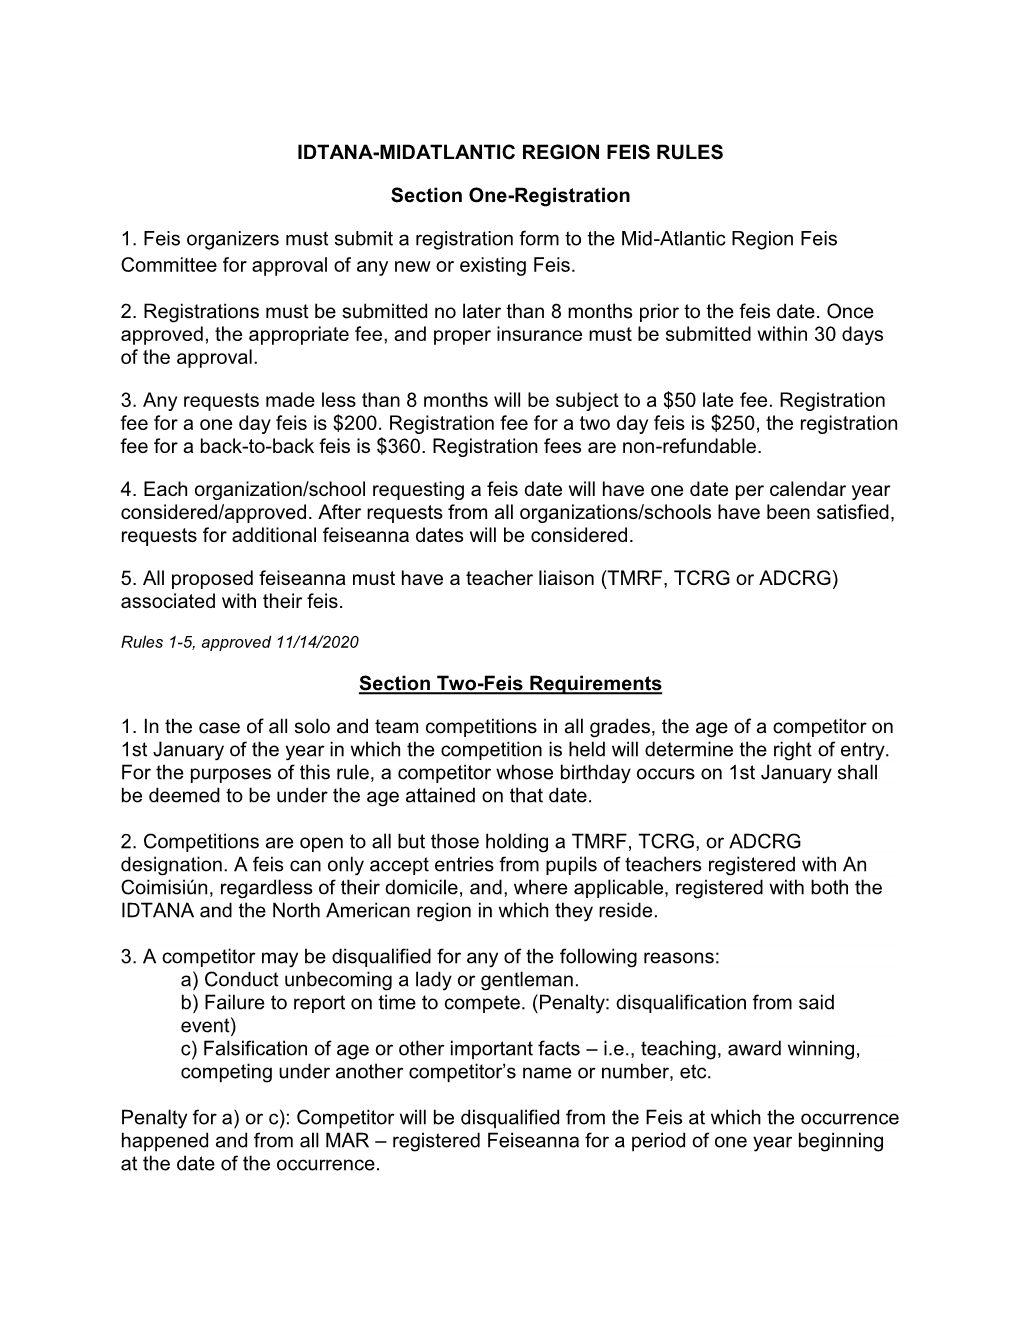 IDTANA-MIDATLANTIC REGION FEIS RULES Section One-Registration 1